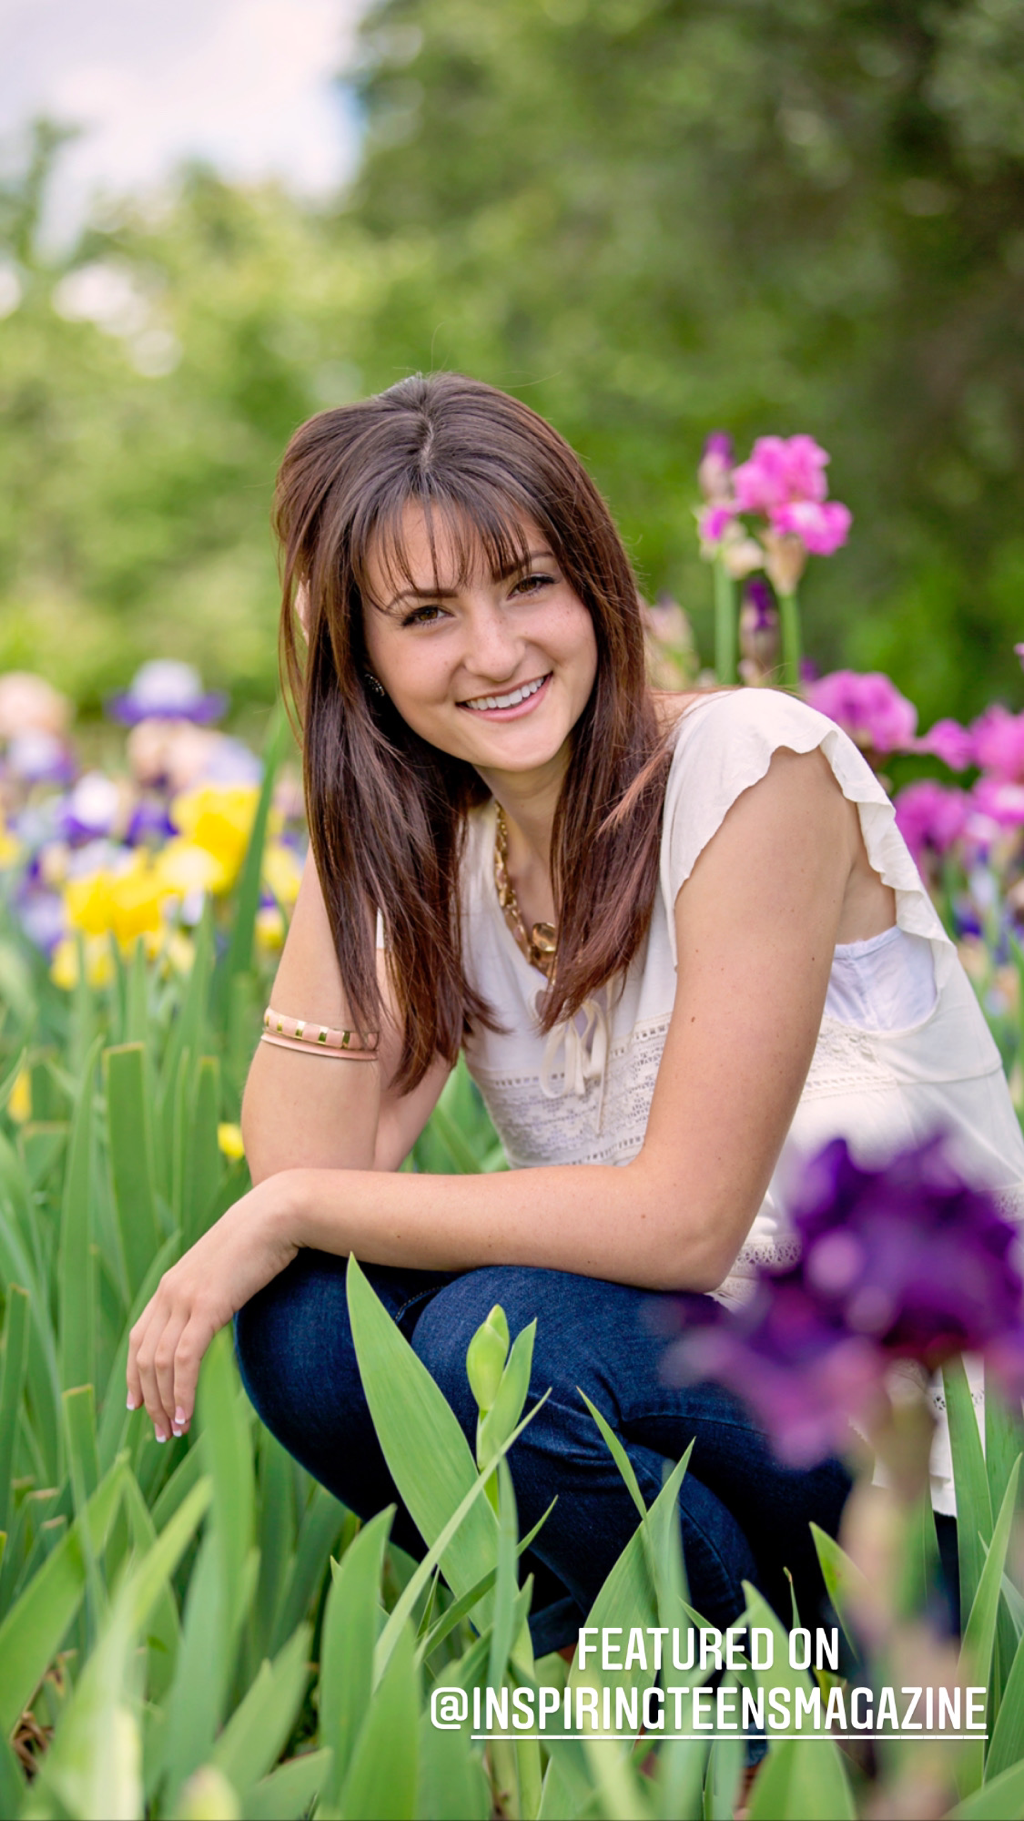 teenage girl with long brown hair sitting in an iris flower field